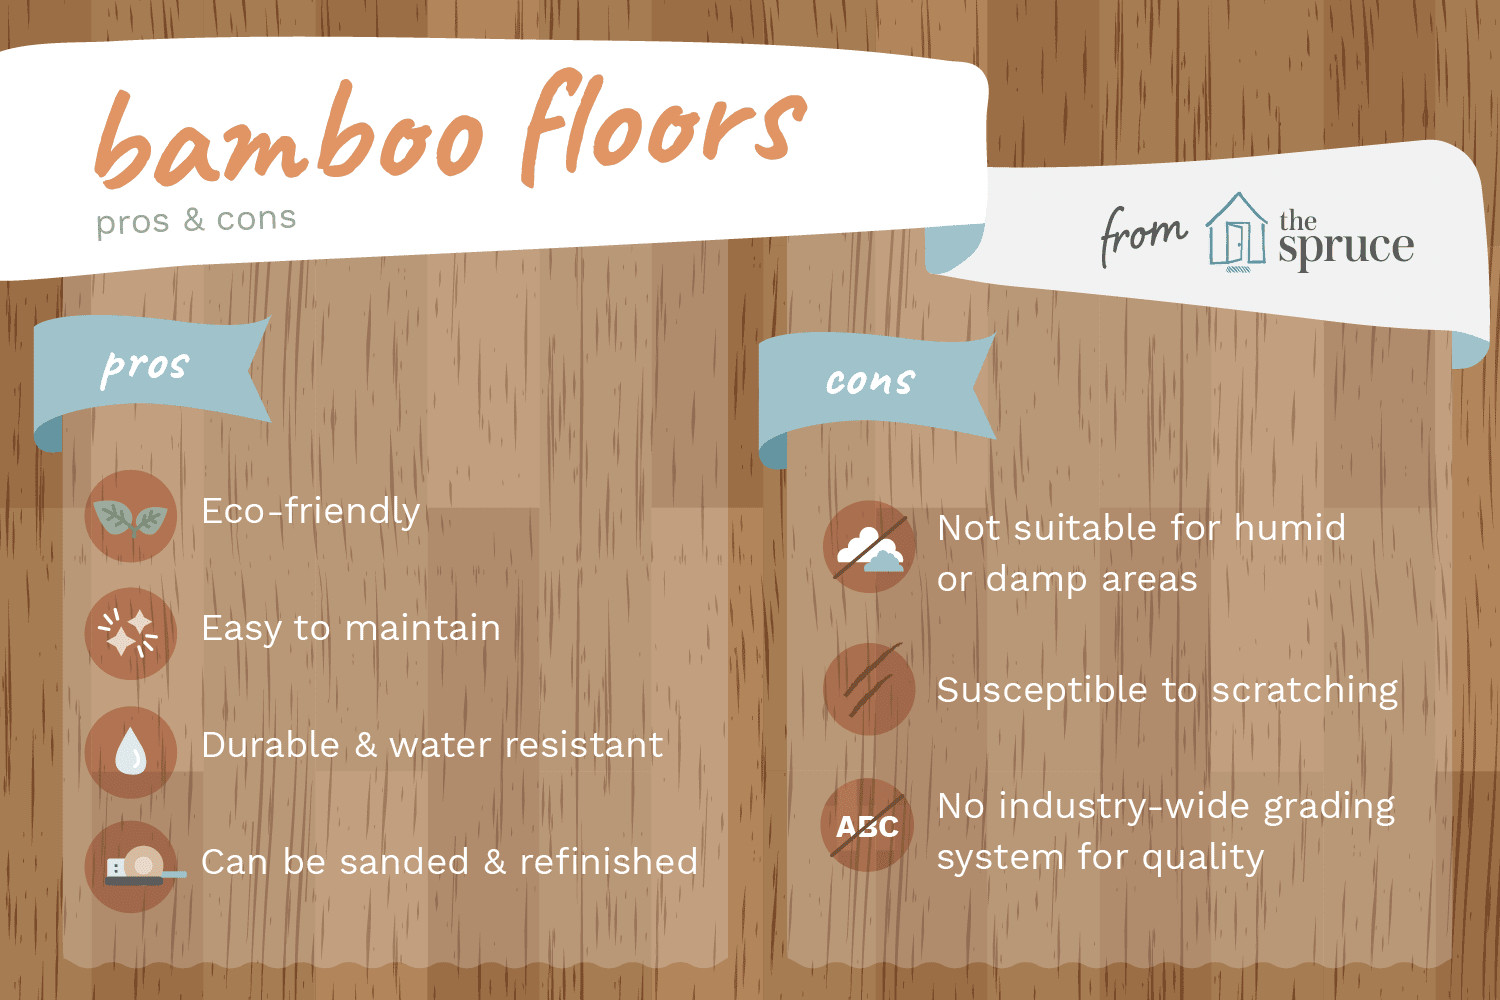 21 Fantastic Most Popular Hardwood Floors 2016 2024 free download most popular hardwood floors 2016 of the advantages and disadvantages of bamboo flooring intended for benefits and drawbacks of bamboo floors 1314694 v3 5b102fccff1b780036c0a4fa